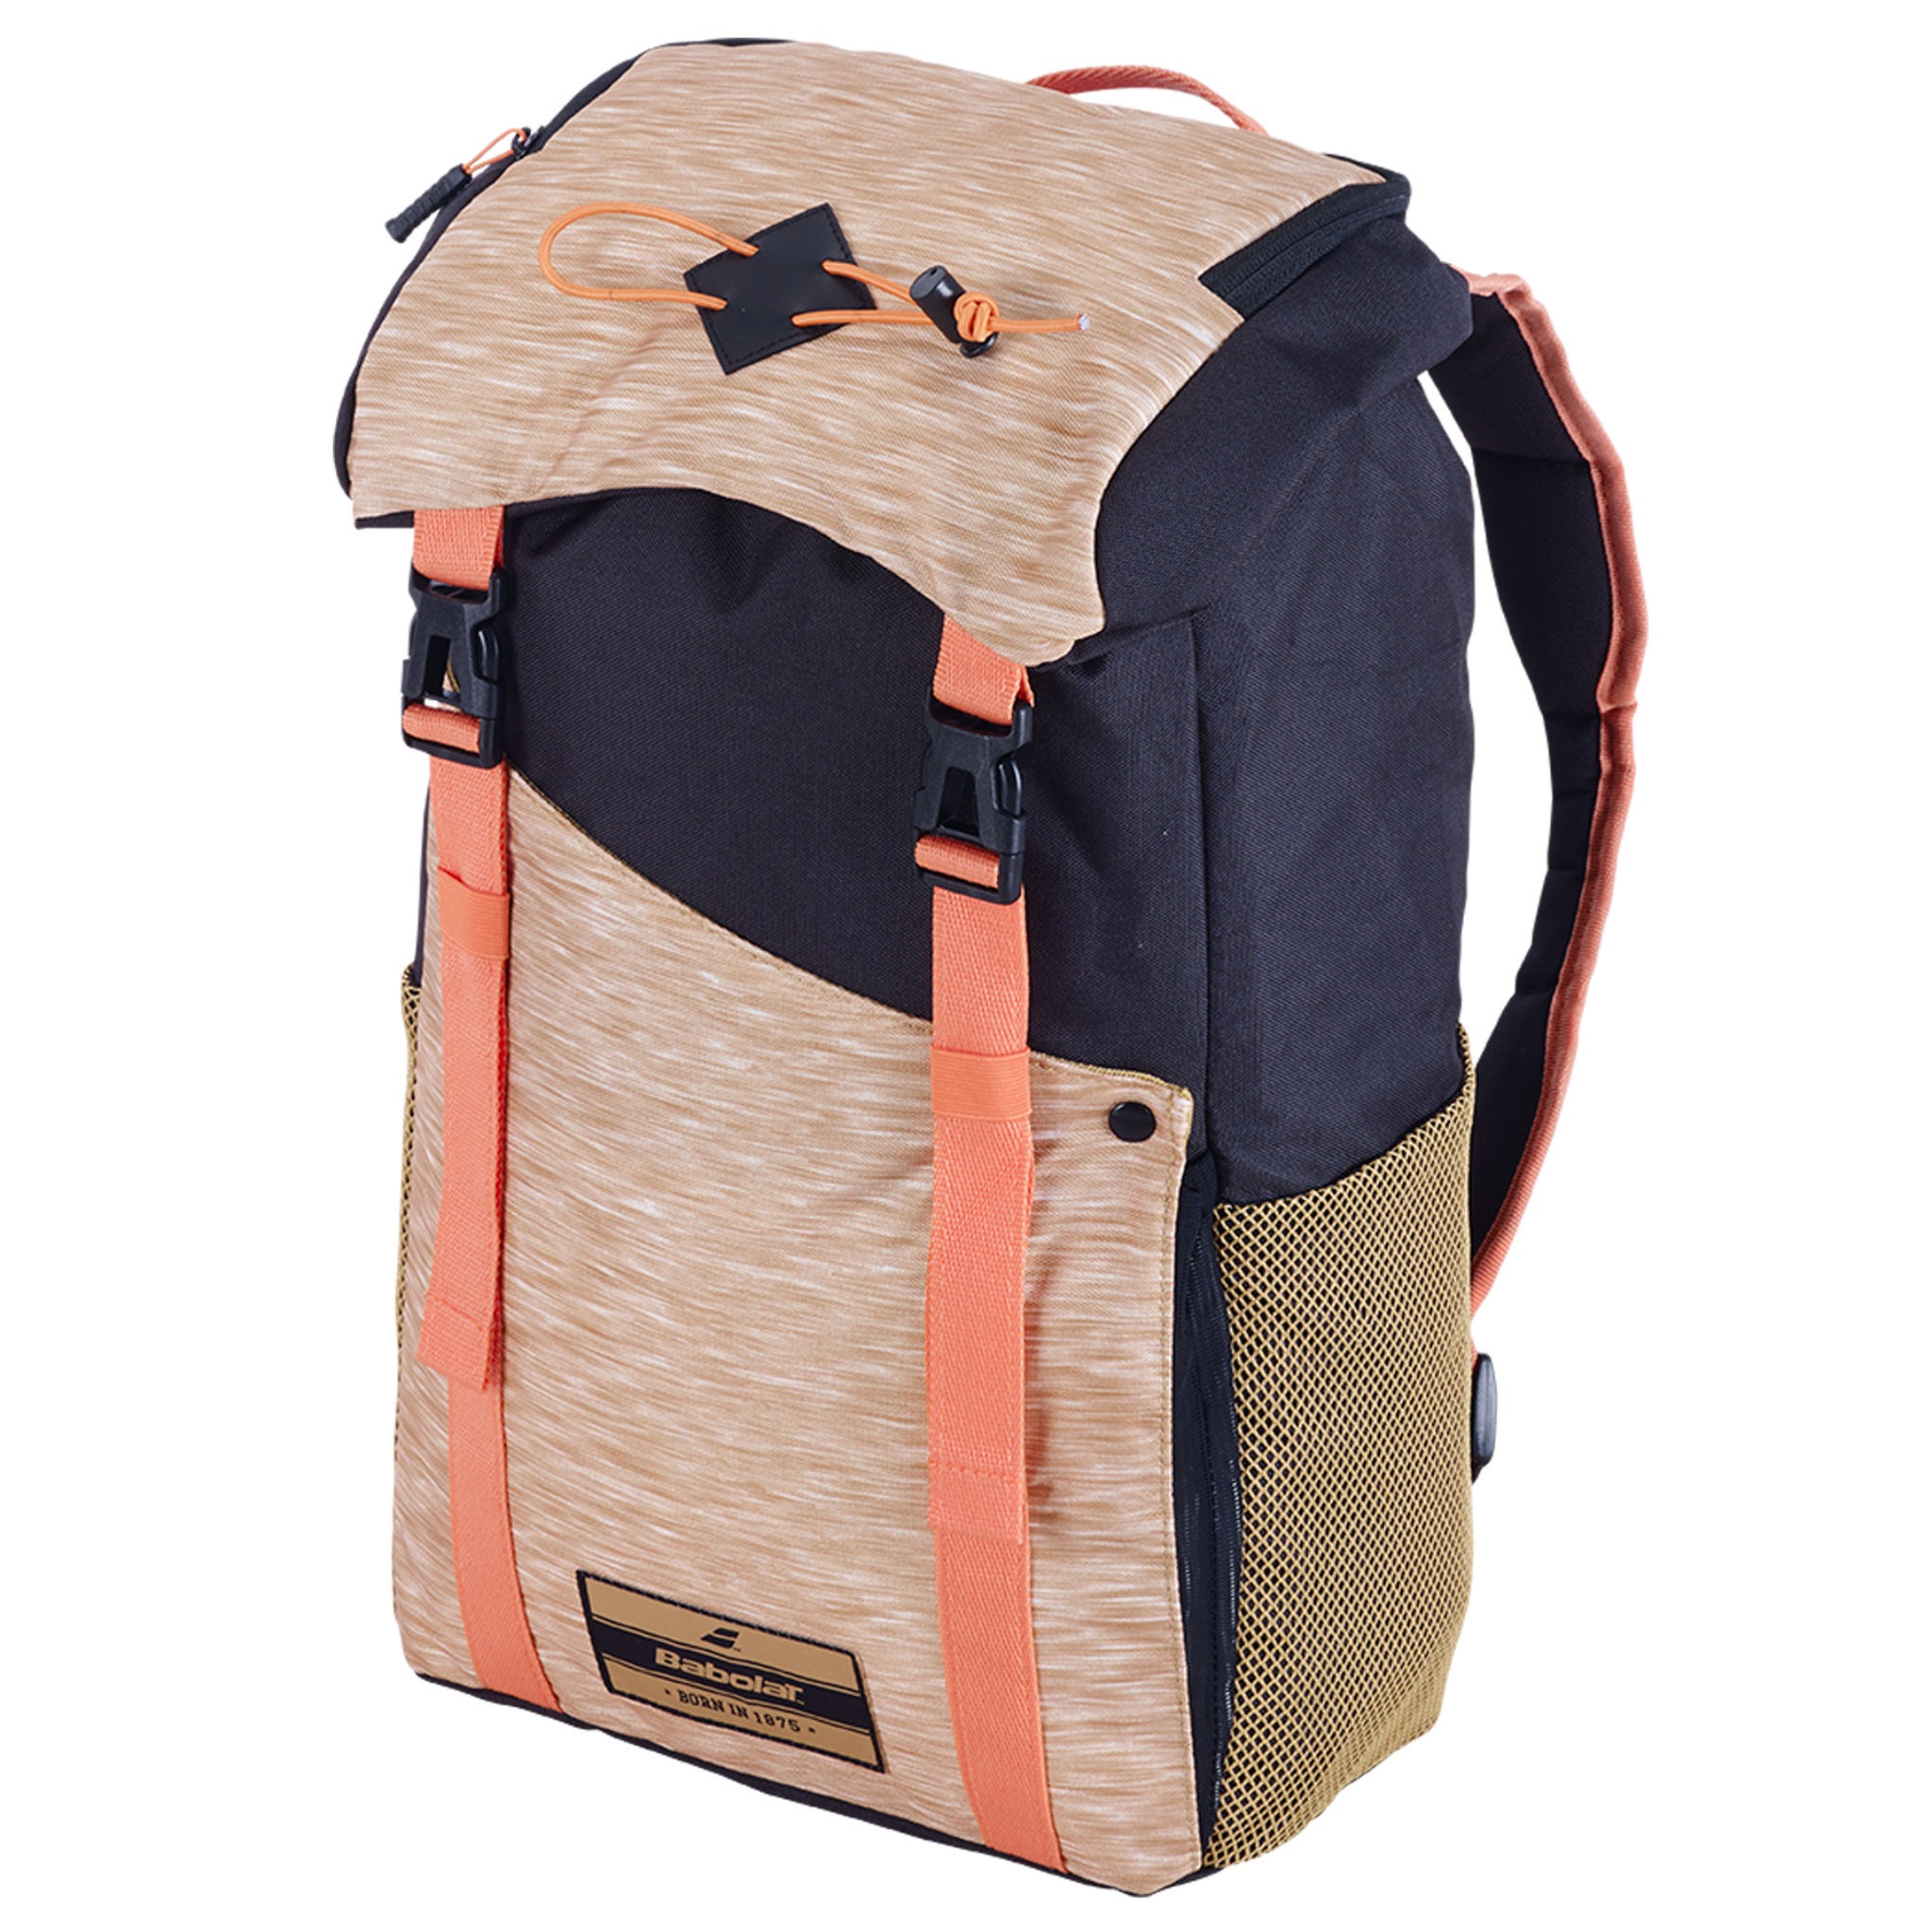 Babolat Backpack Classic